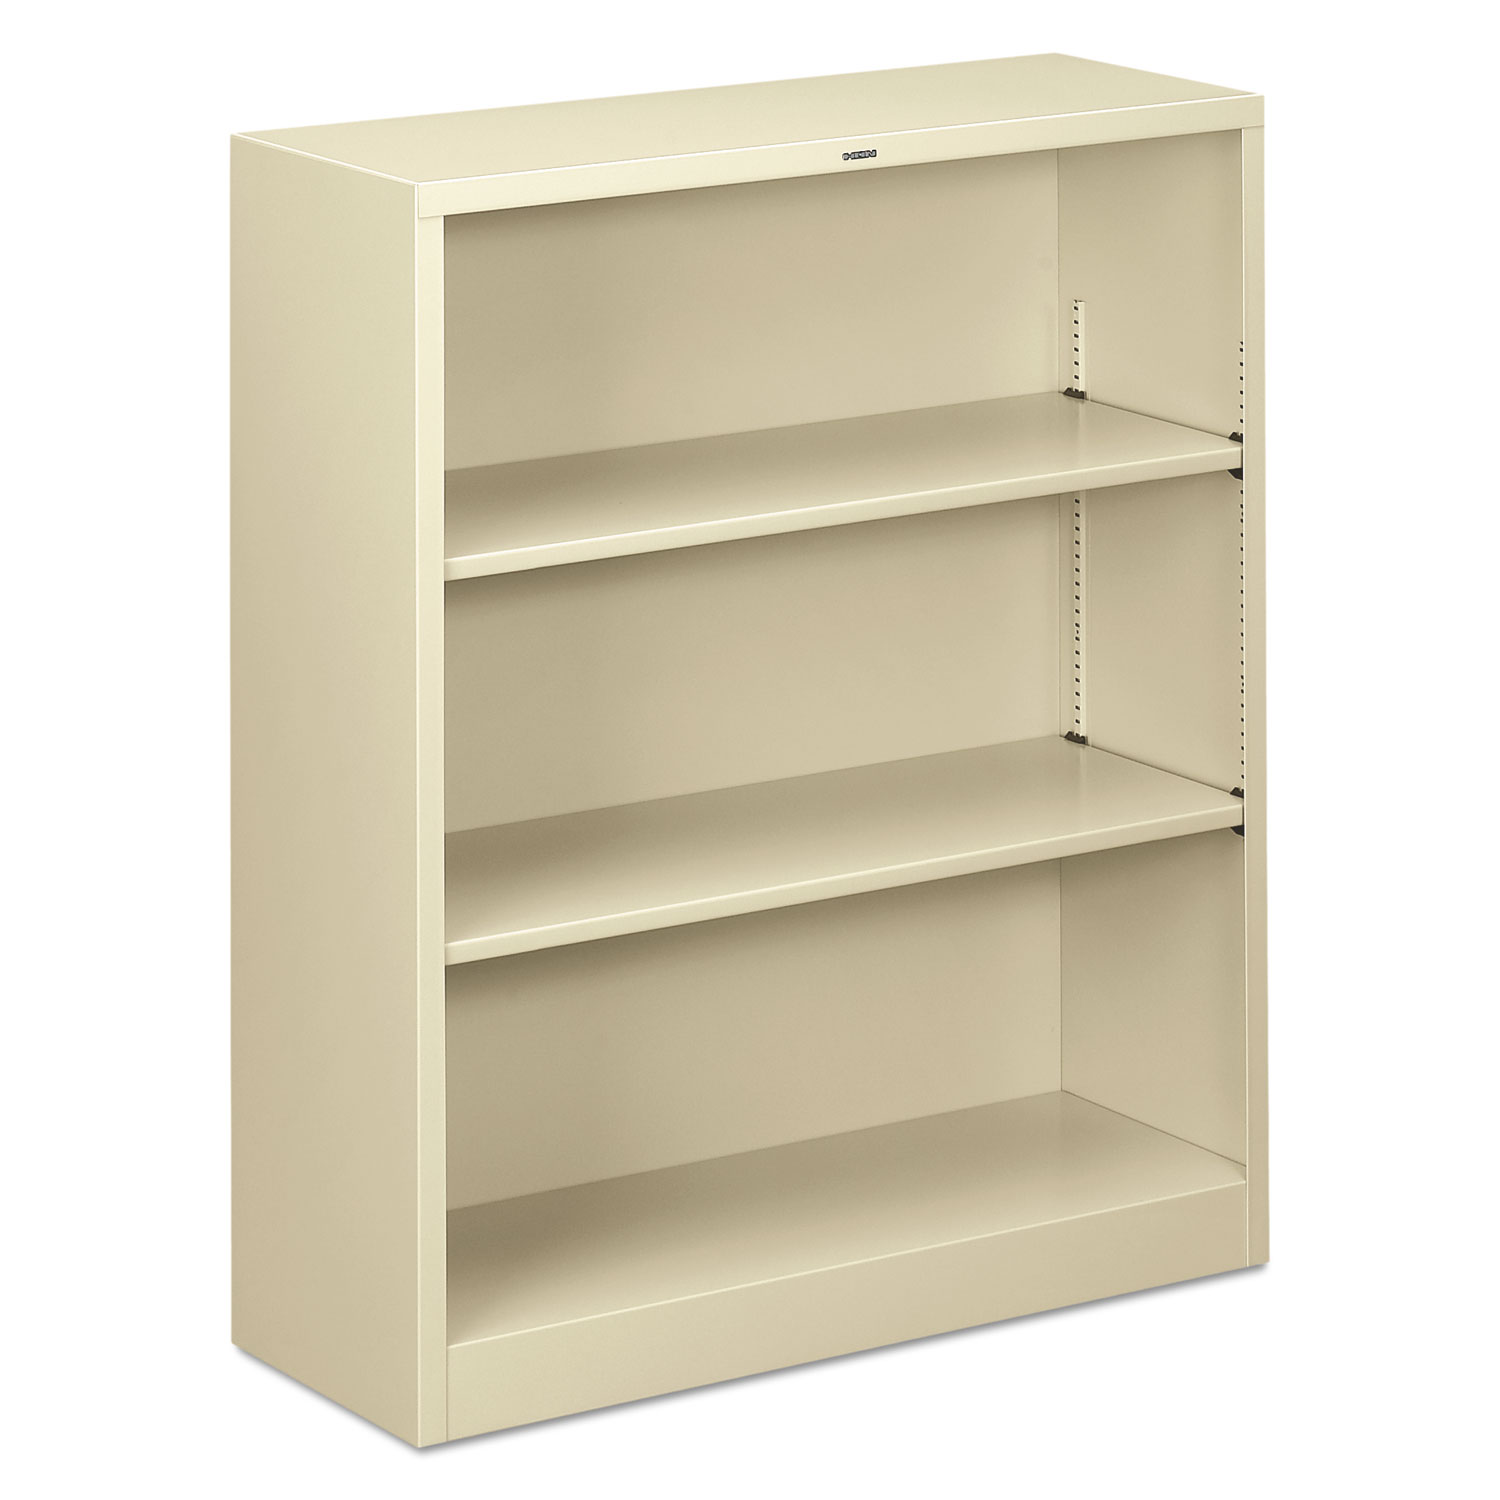  HON HS42ABC.L Metal Bookcase, Three-Shelf, 34-1/2w x 12-5/8d x 41h, Putty (HONS42ABCL) 